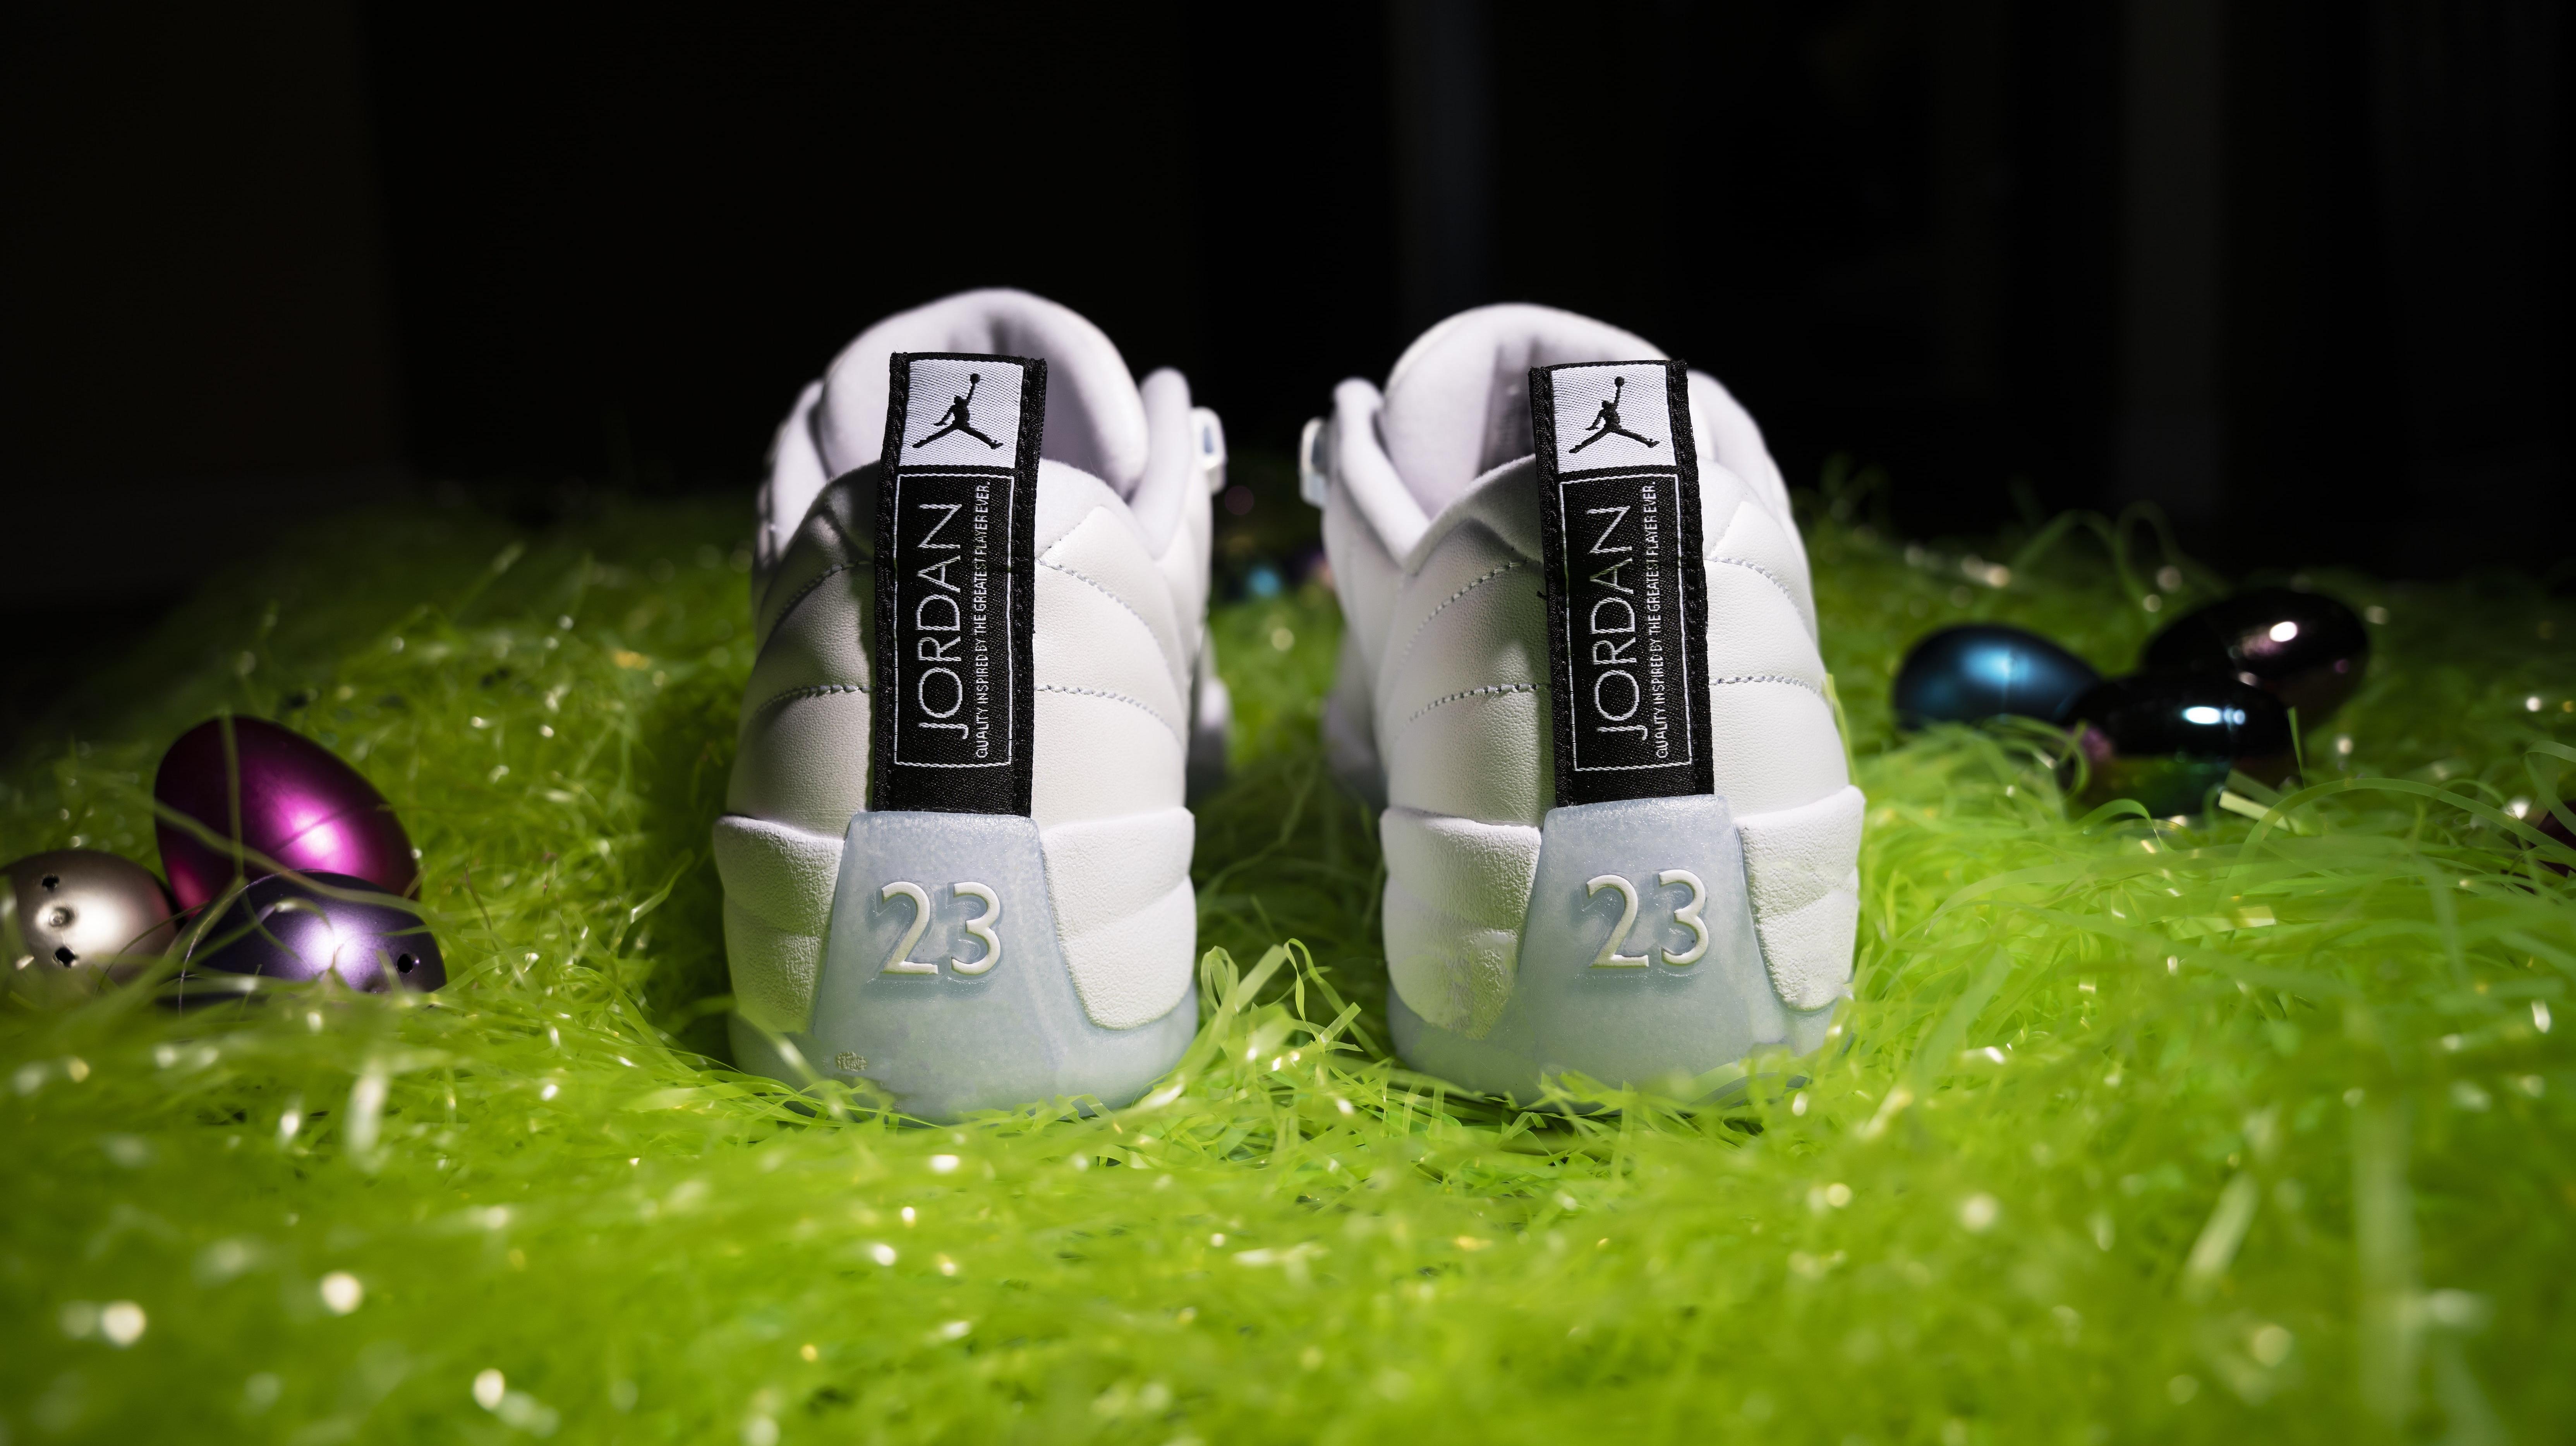 Sneakers Release- Jordan 12 Low “Easter” White/Multi-Color  Men’s Shoe, Out 4/3